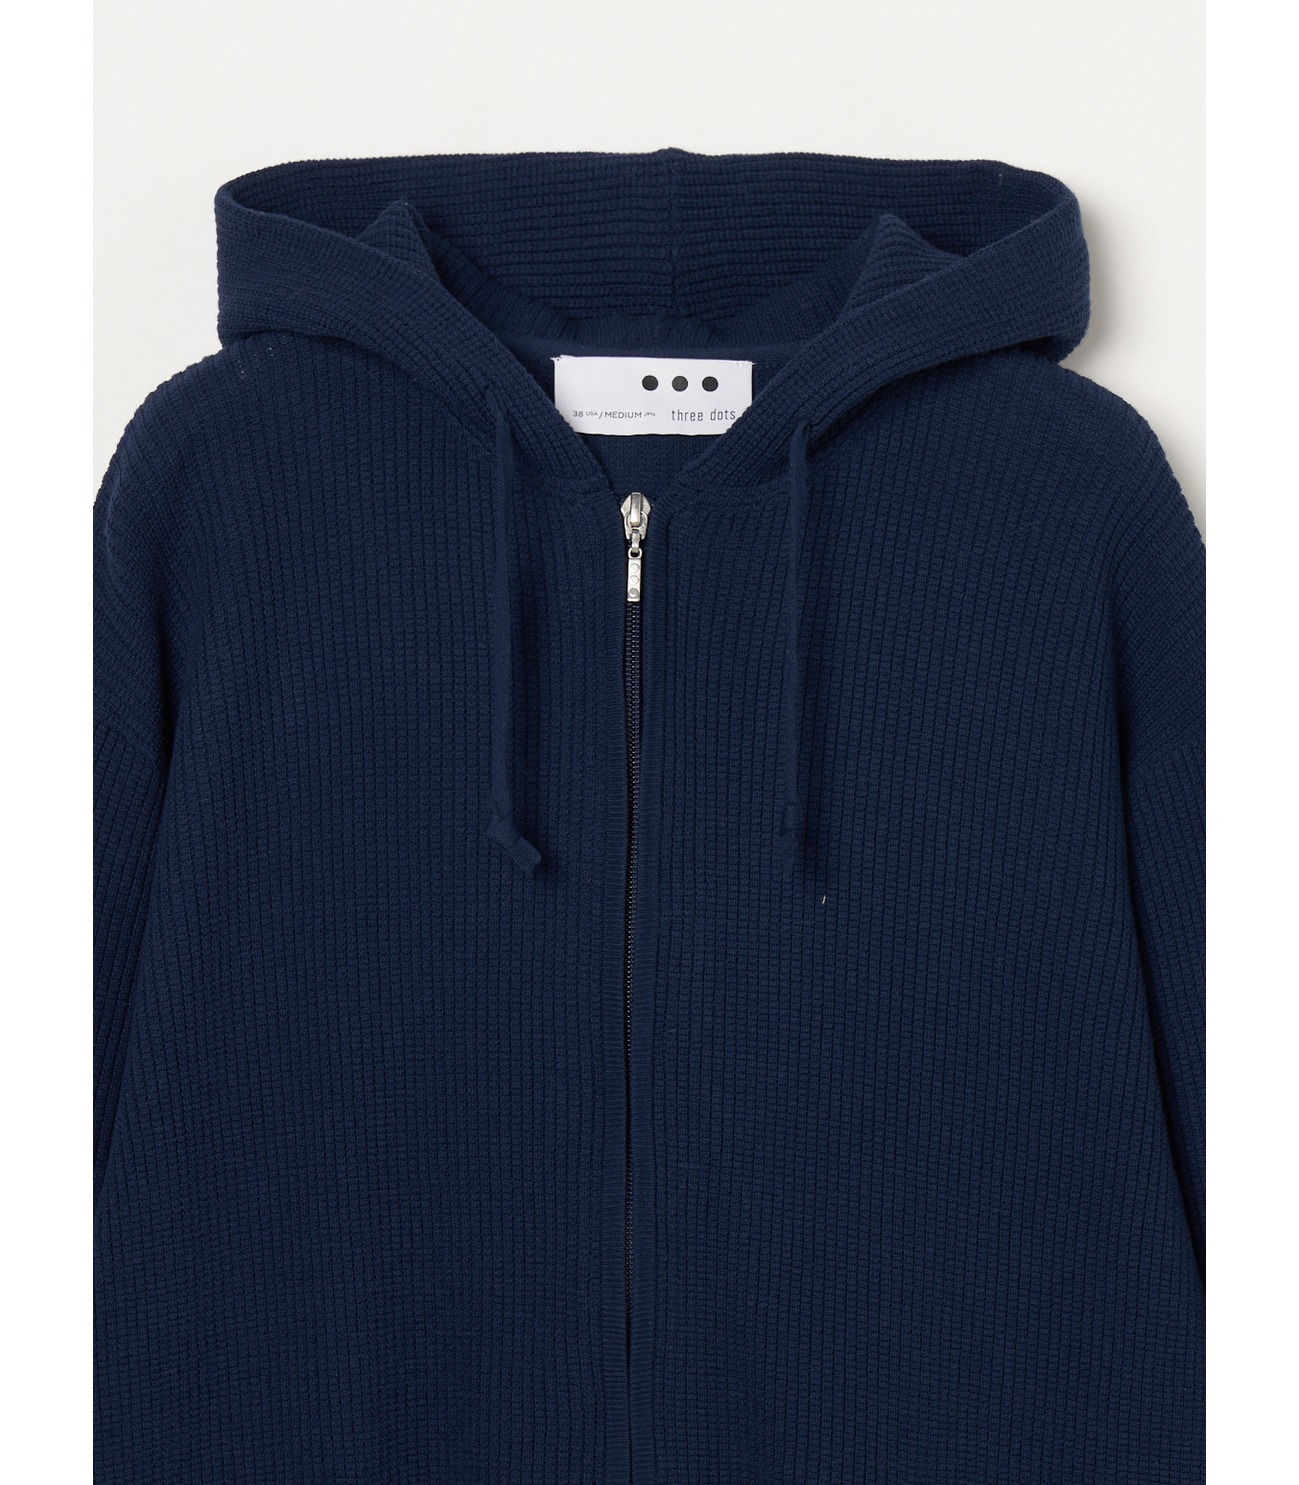 Men's 18G cotton nylon zip hoody 詳細画像 navy 2